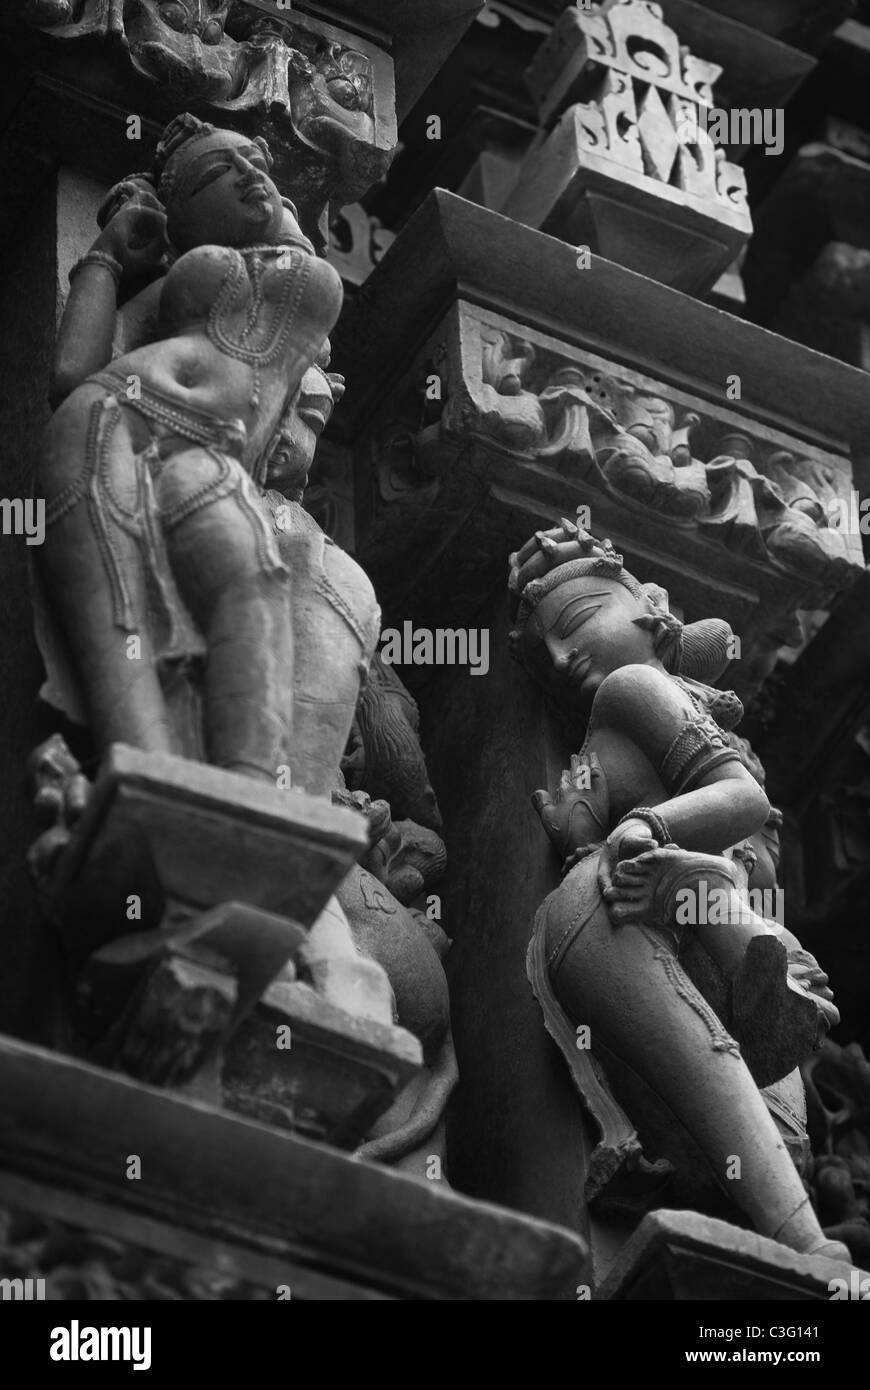 Sculptures detail of a temple, Khajuraho, Chhatarpur District, Madhya Pradesh, India Stock Photo